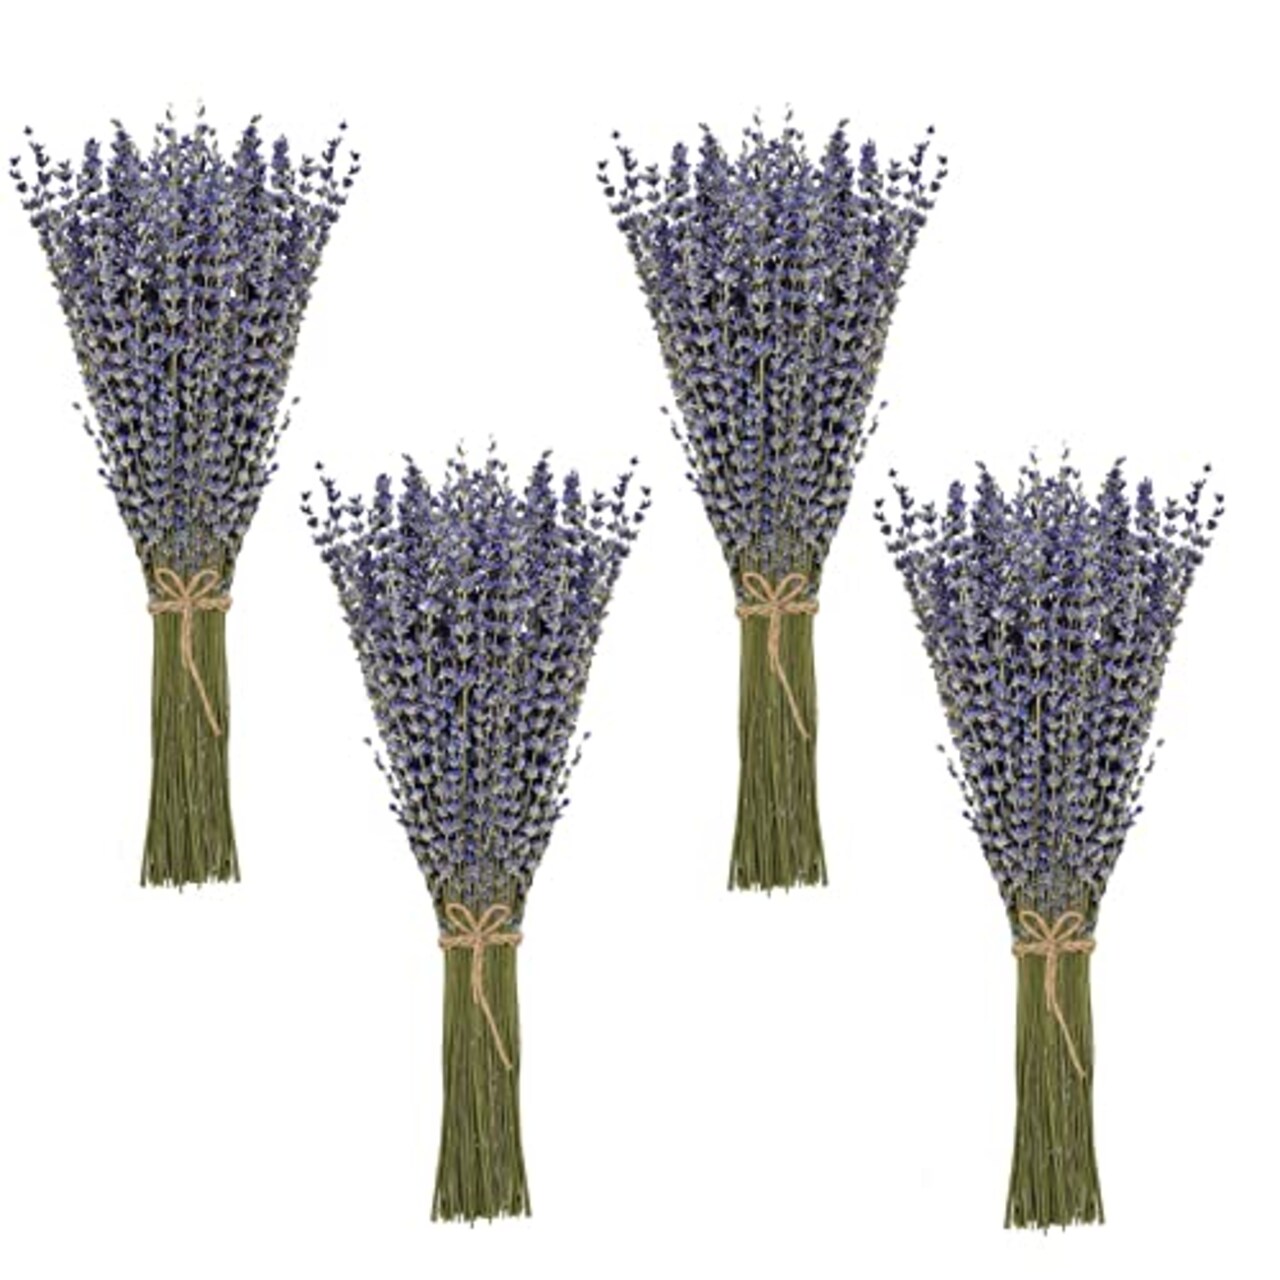 Timoo Dried Lavender Bundles 100% Natural Dried Lavender Flowers for Home  Decoration, Photo Props, Home Fragrance, 4 Bundles Pack